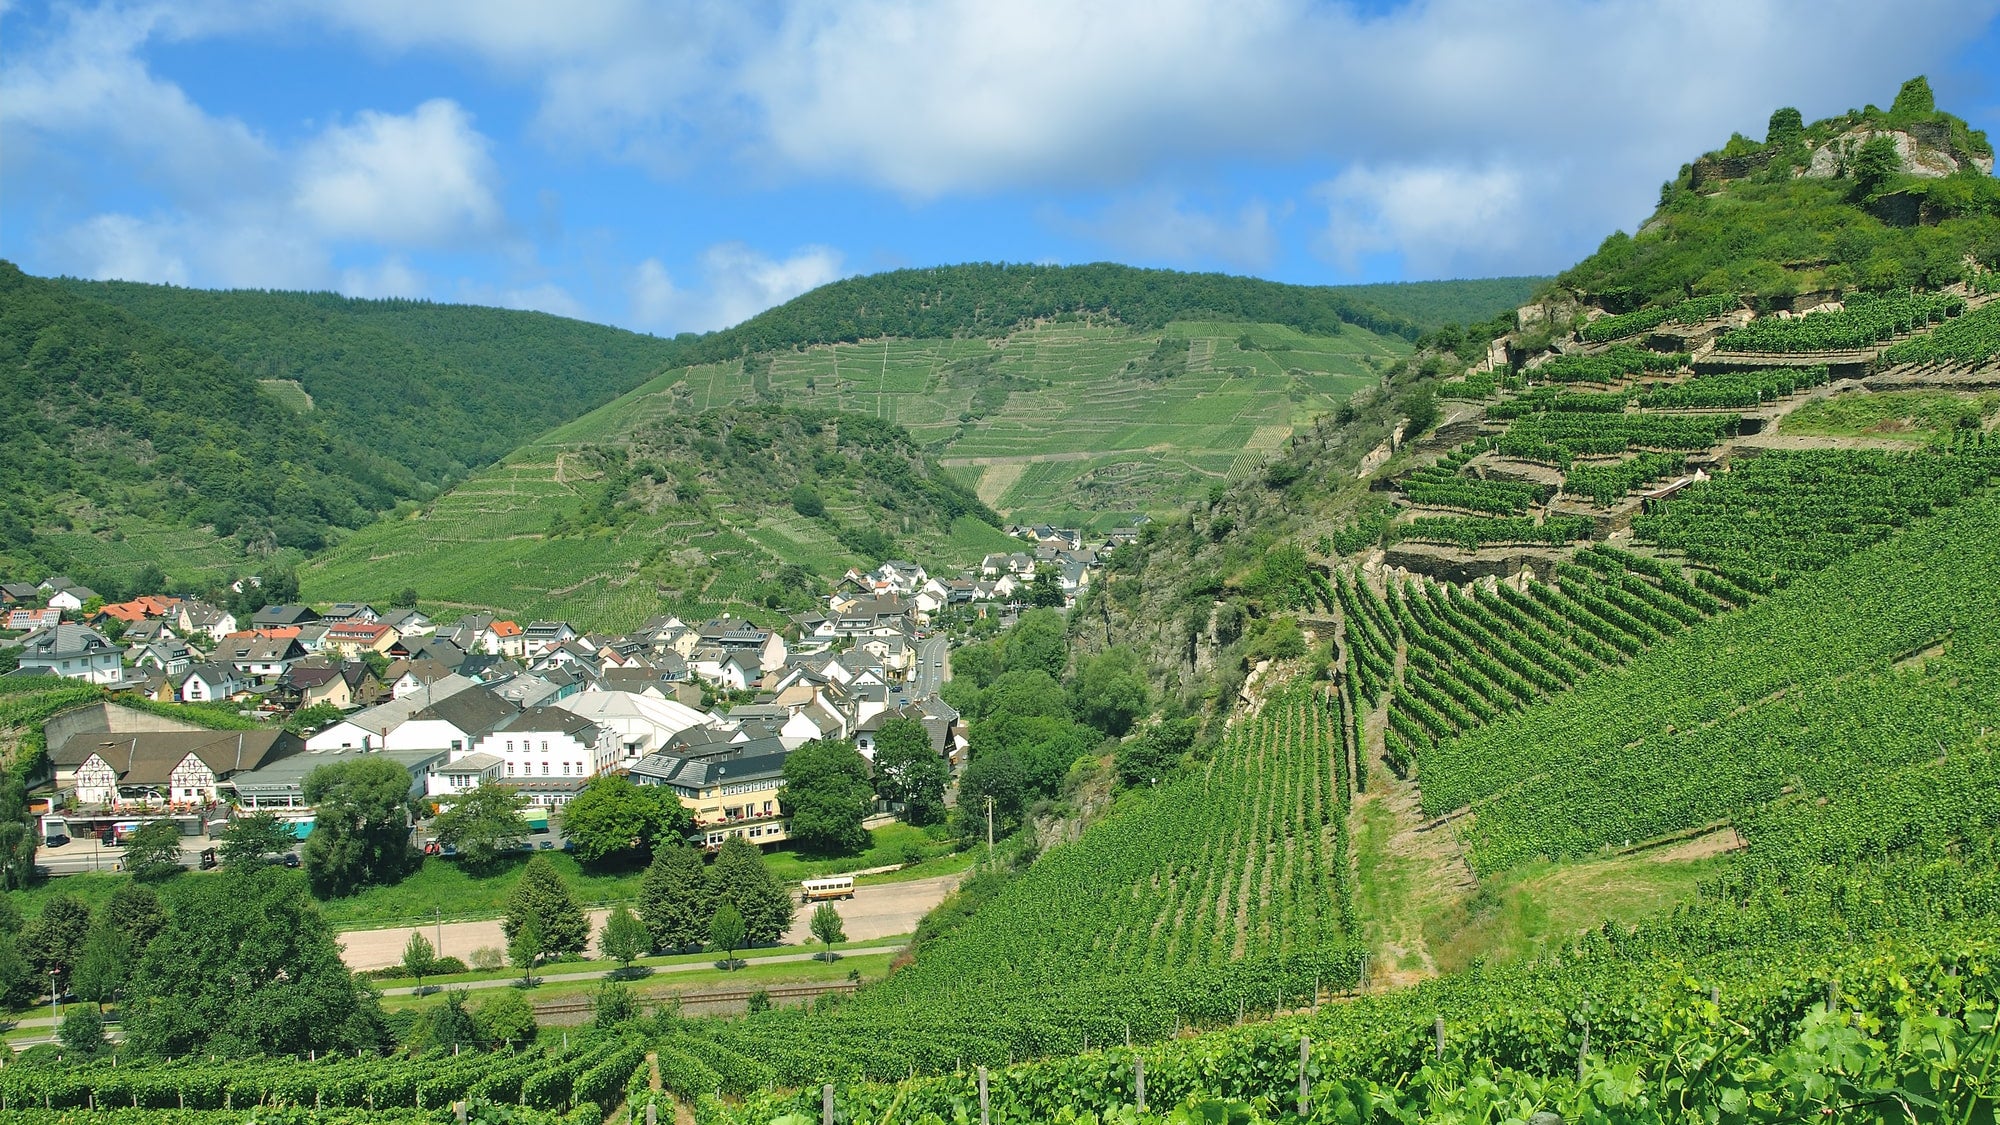 the mountainous Ahr Valley wine region, as featured in Single Thread Wines’ wine blog on New World vs Old World Pinot Noir